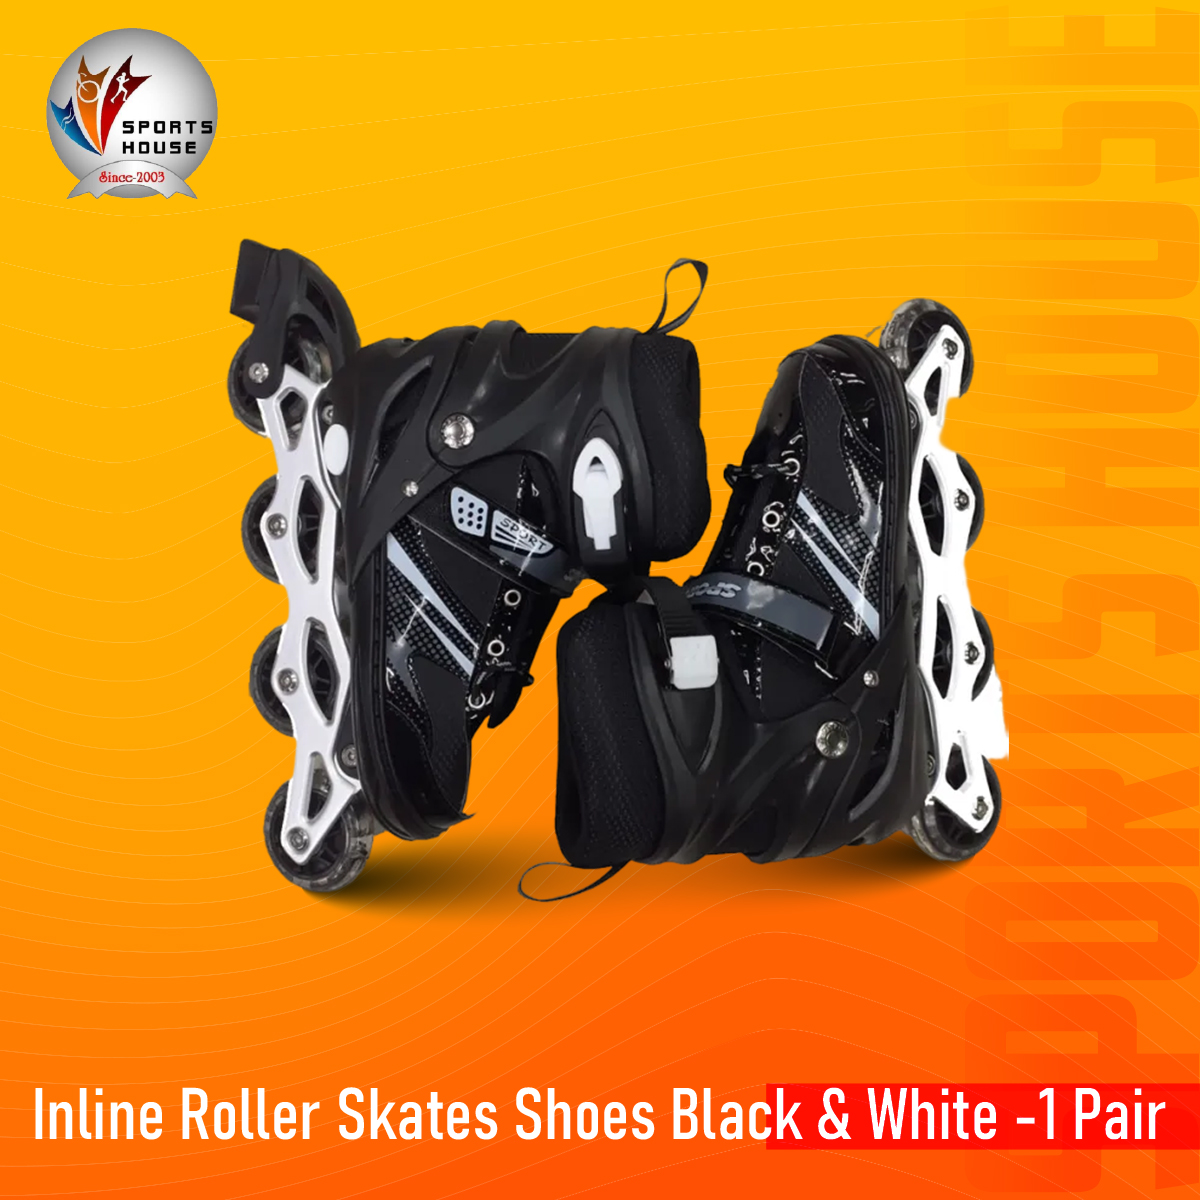 Inline roller skates shoes Black & White -1 Pair- Size (34-38)